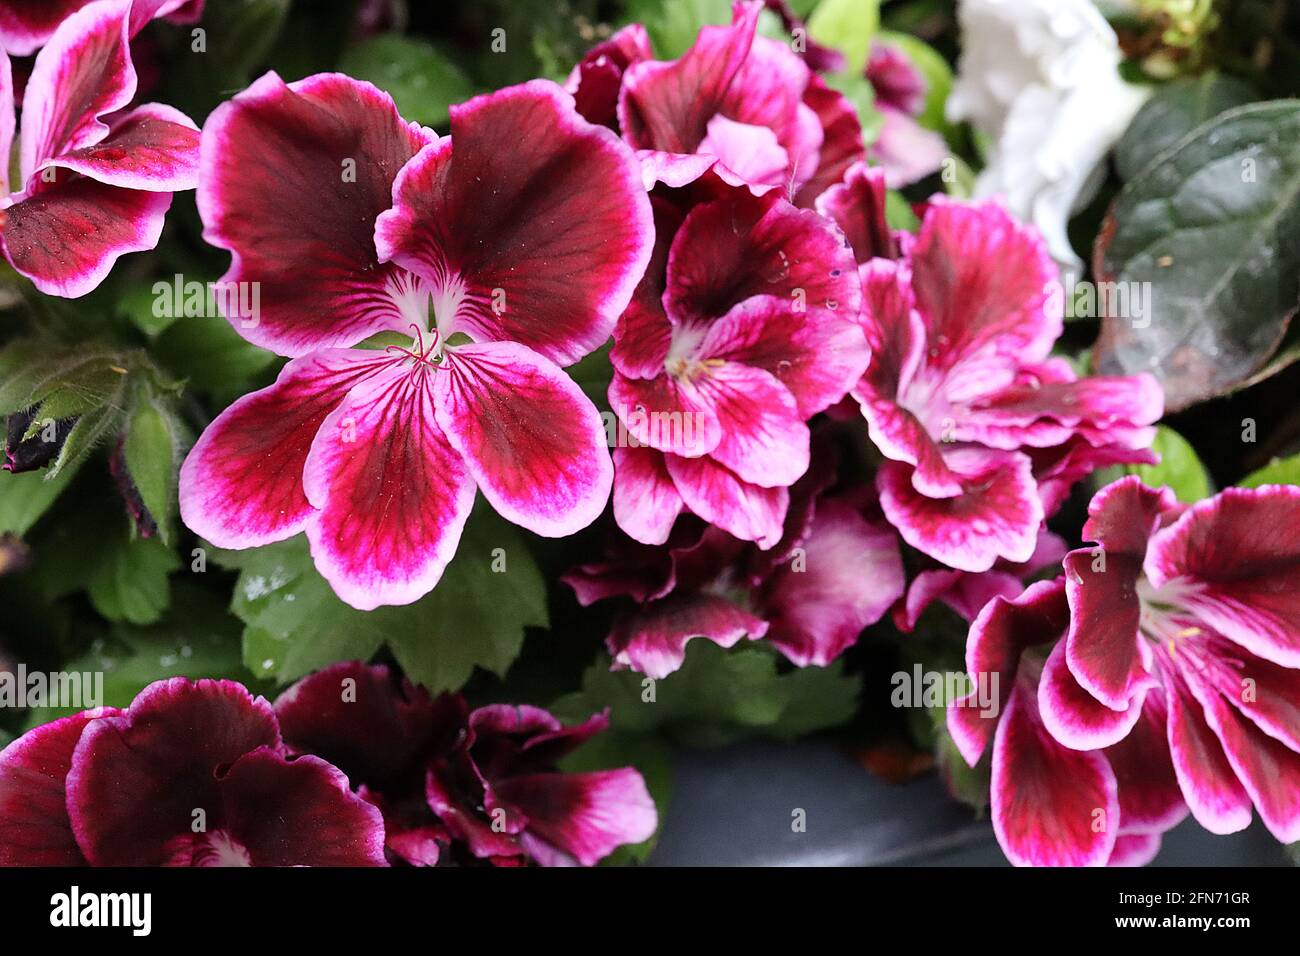 Pelargonium grandiflorum ‘Elegance Regal Imperial’  pelargonium Imperial – maroon flowers with fine pale pink margins,  May, England, UK Stock Photo